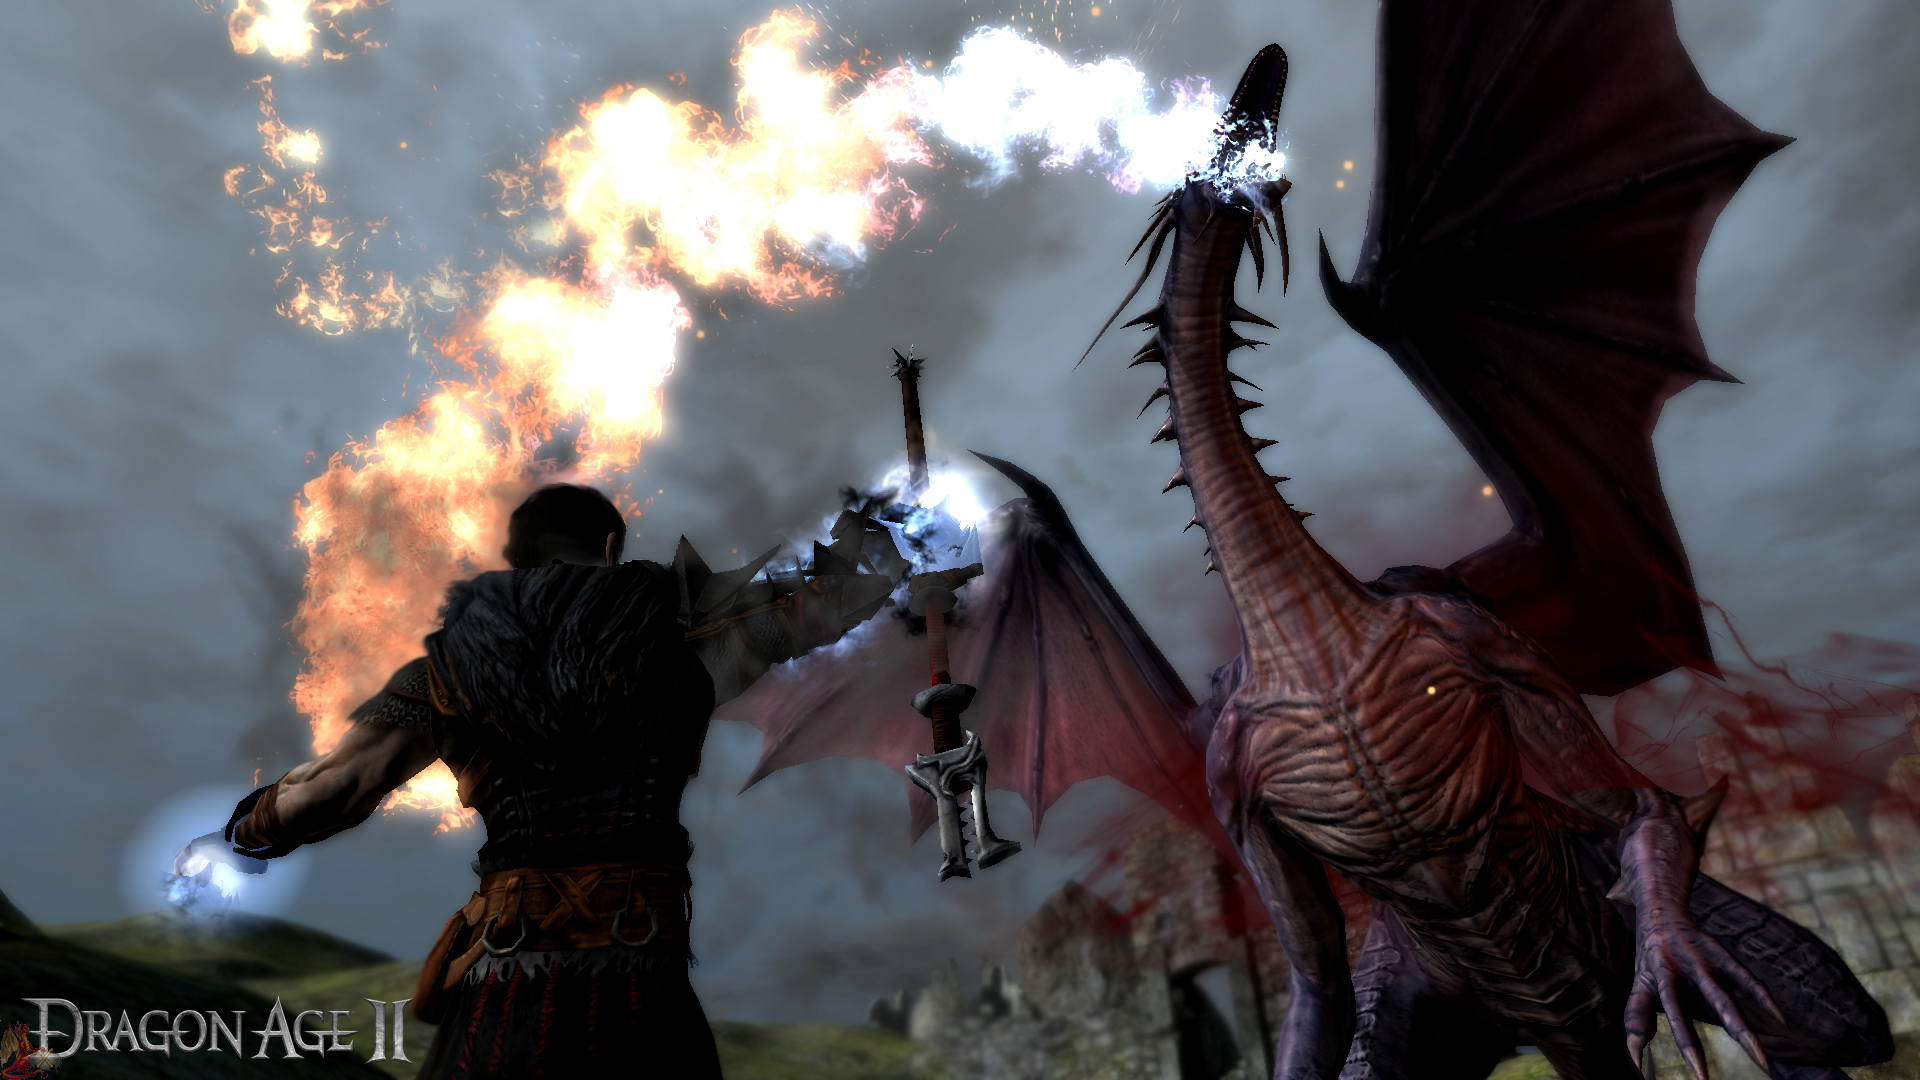  Dragon Age: Origins - Xbox 360 : Video Games